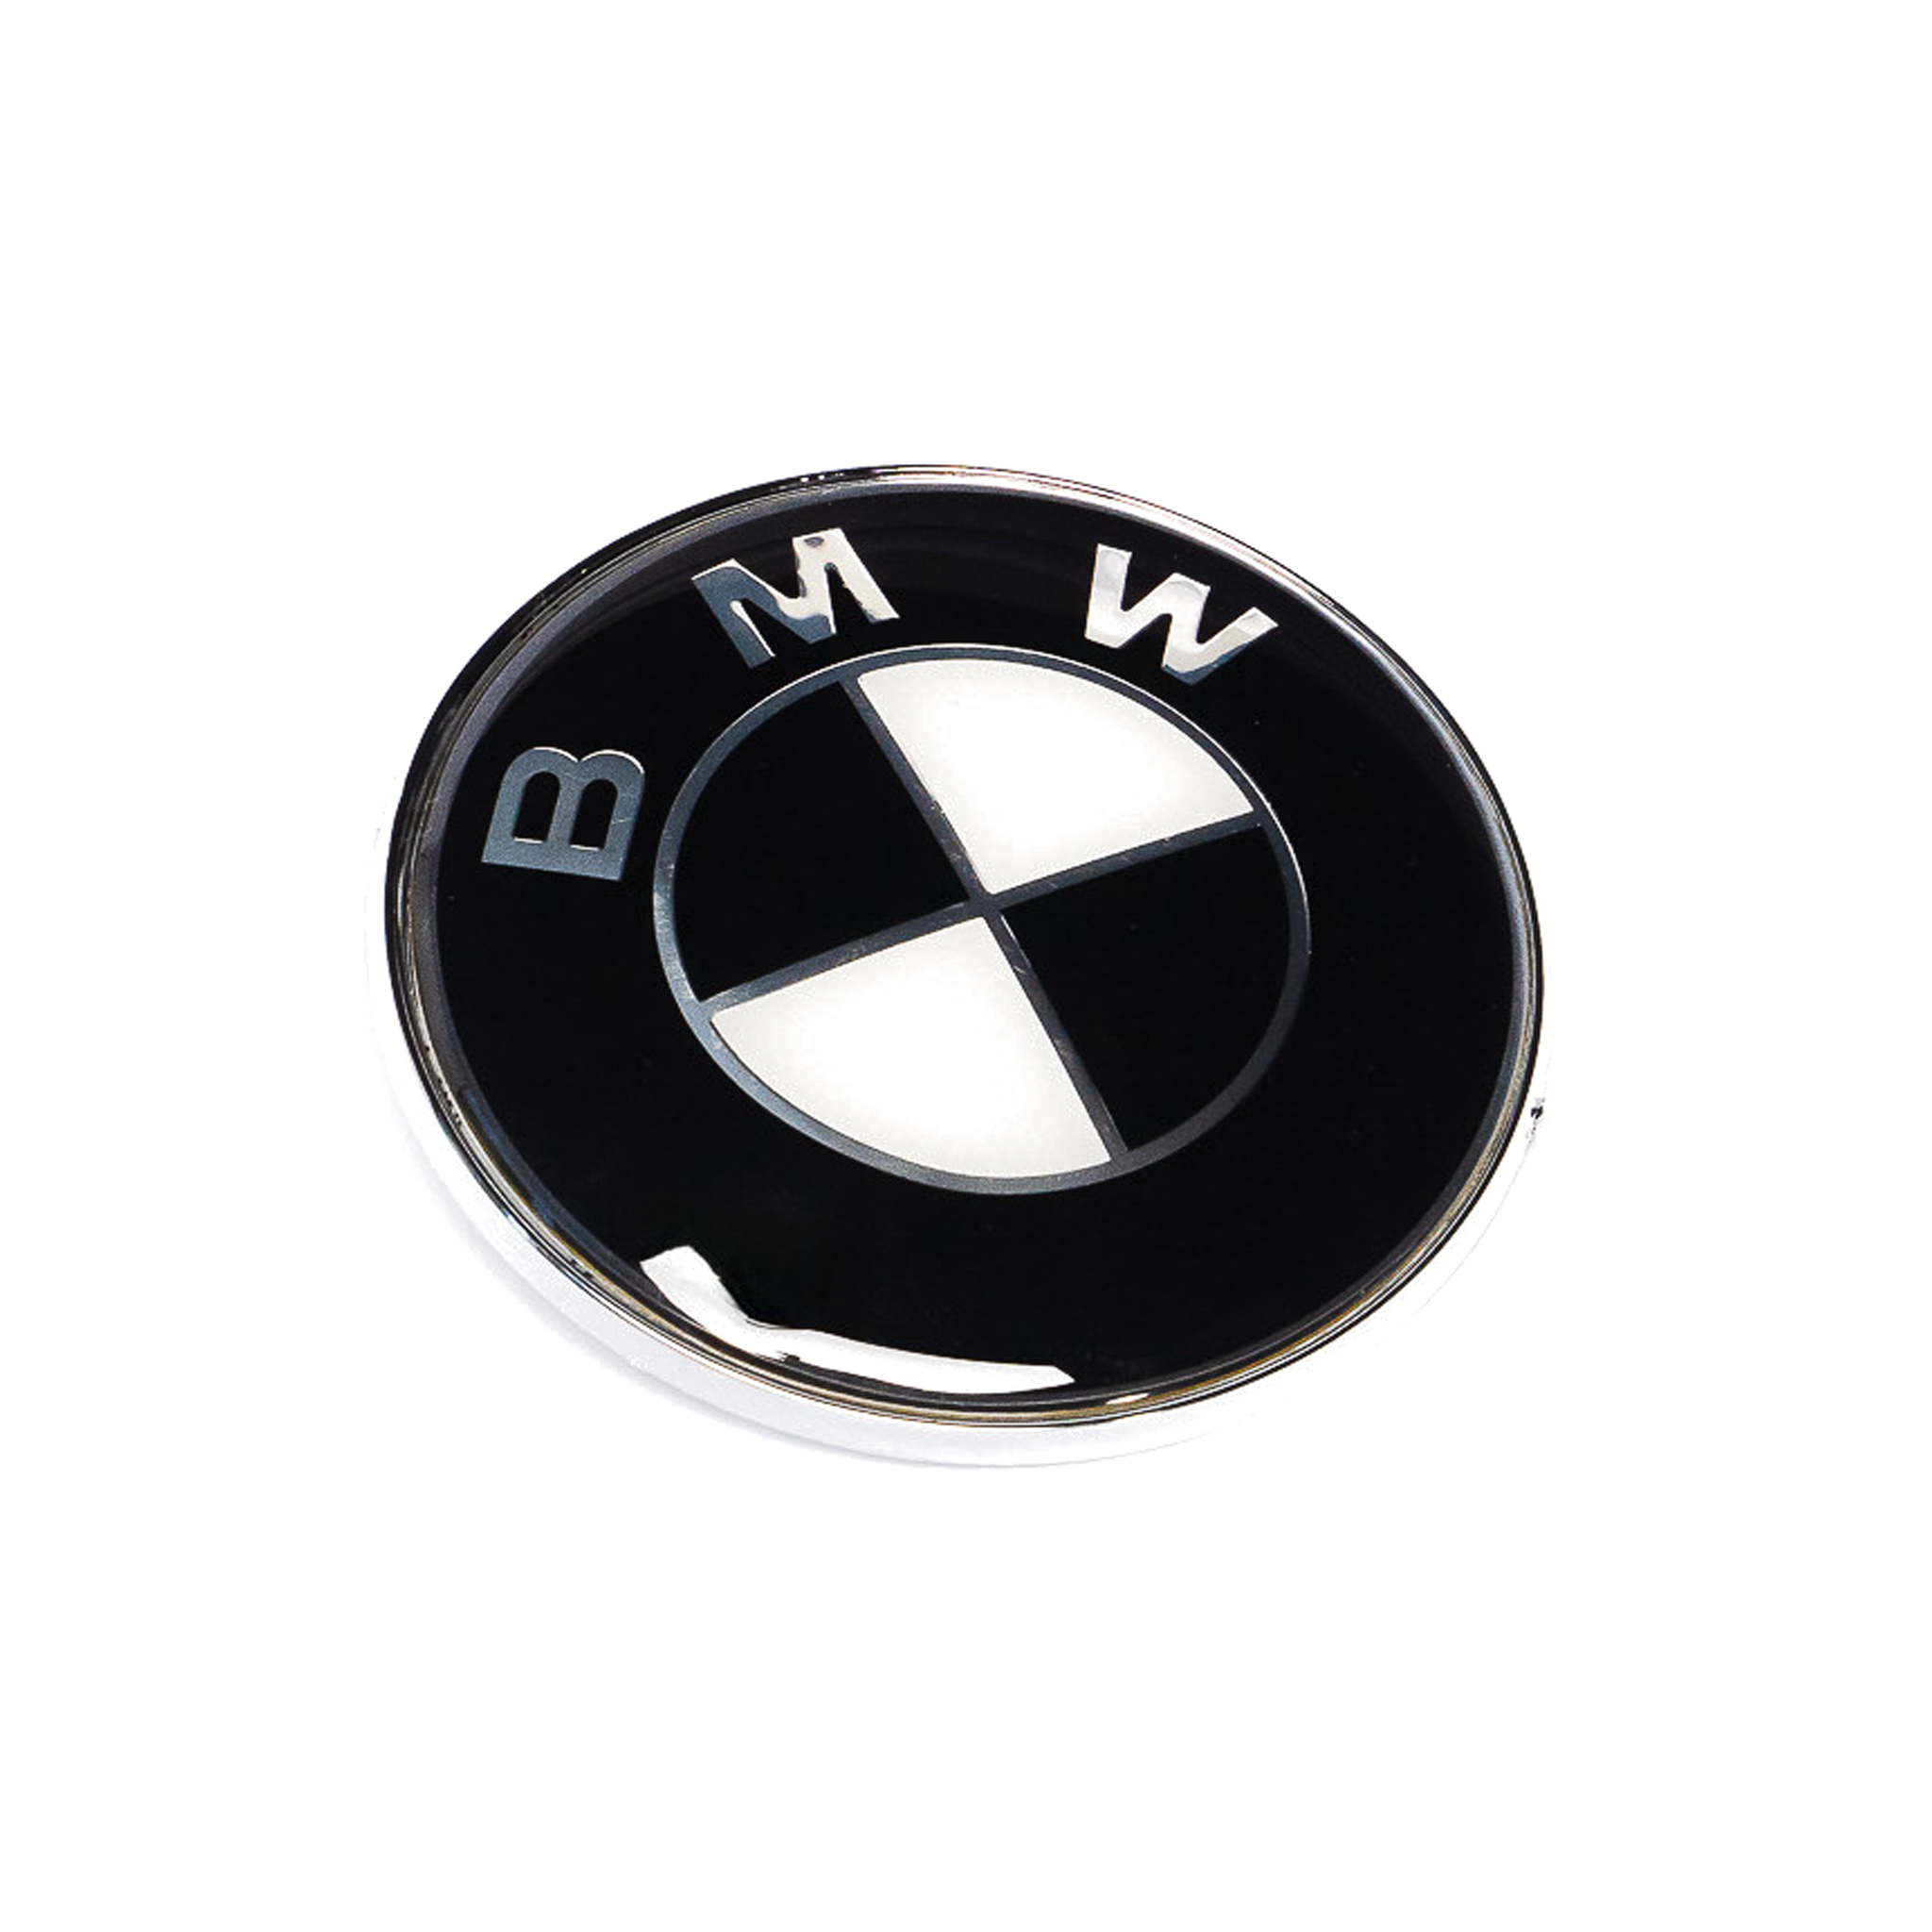 Exon BMW Style Stealth Black / White Hood Badge Emblem 82mm for BMW E-Series 1M E82 M3 E90 E92 M5 E60 M6 E63 & 1 3 5 6 7 Series E88 E91 E61 E64 E65